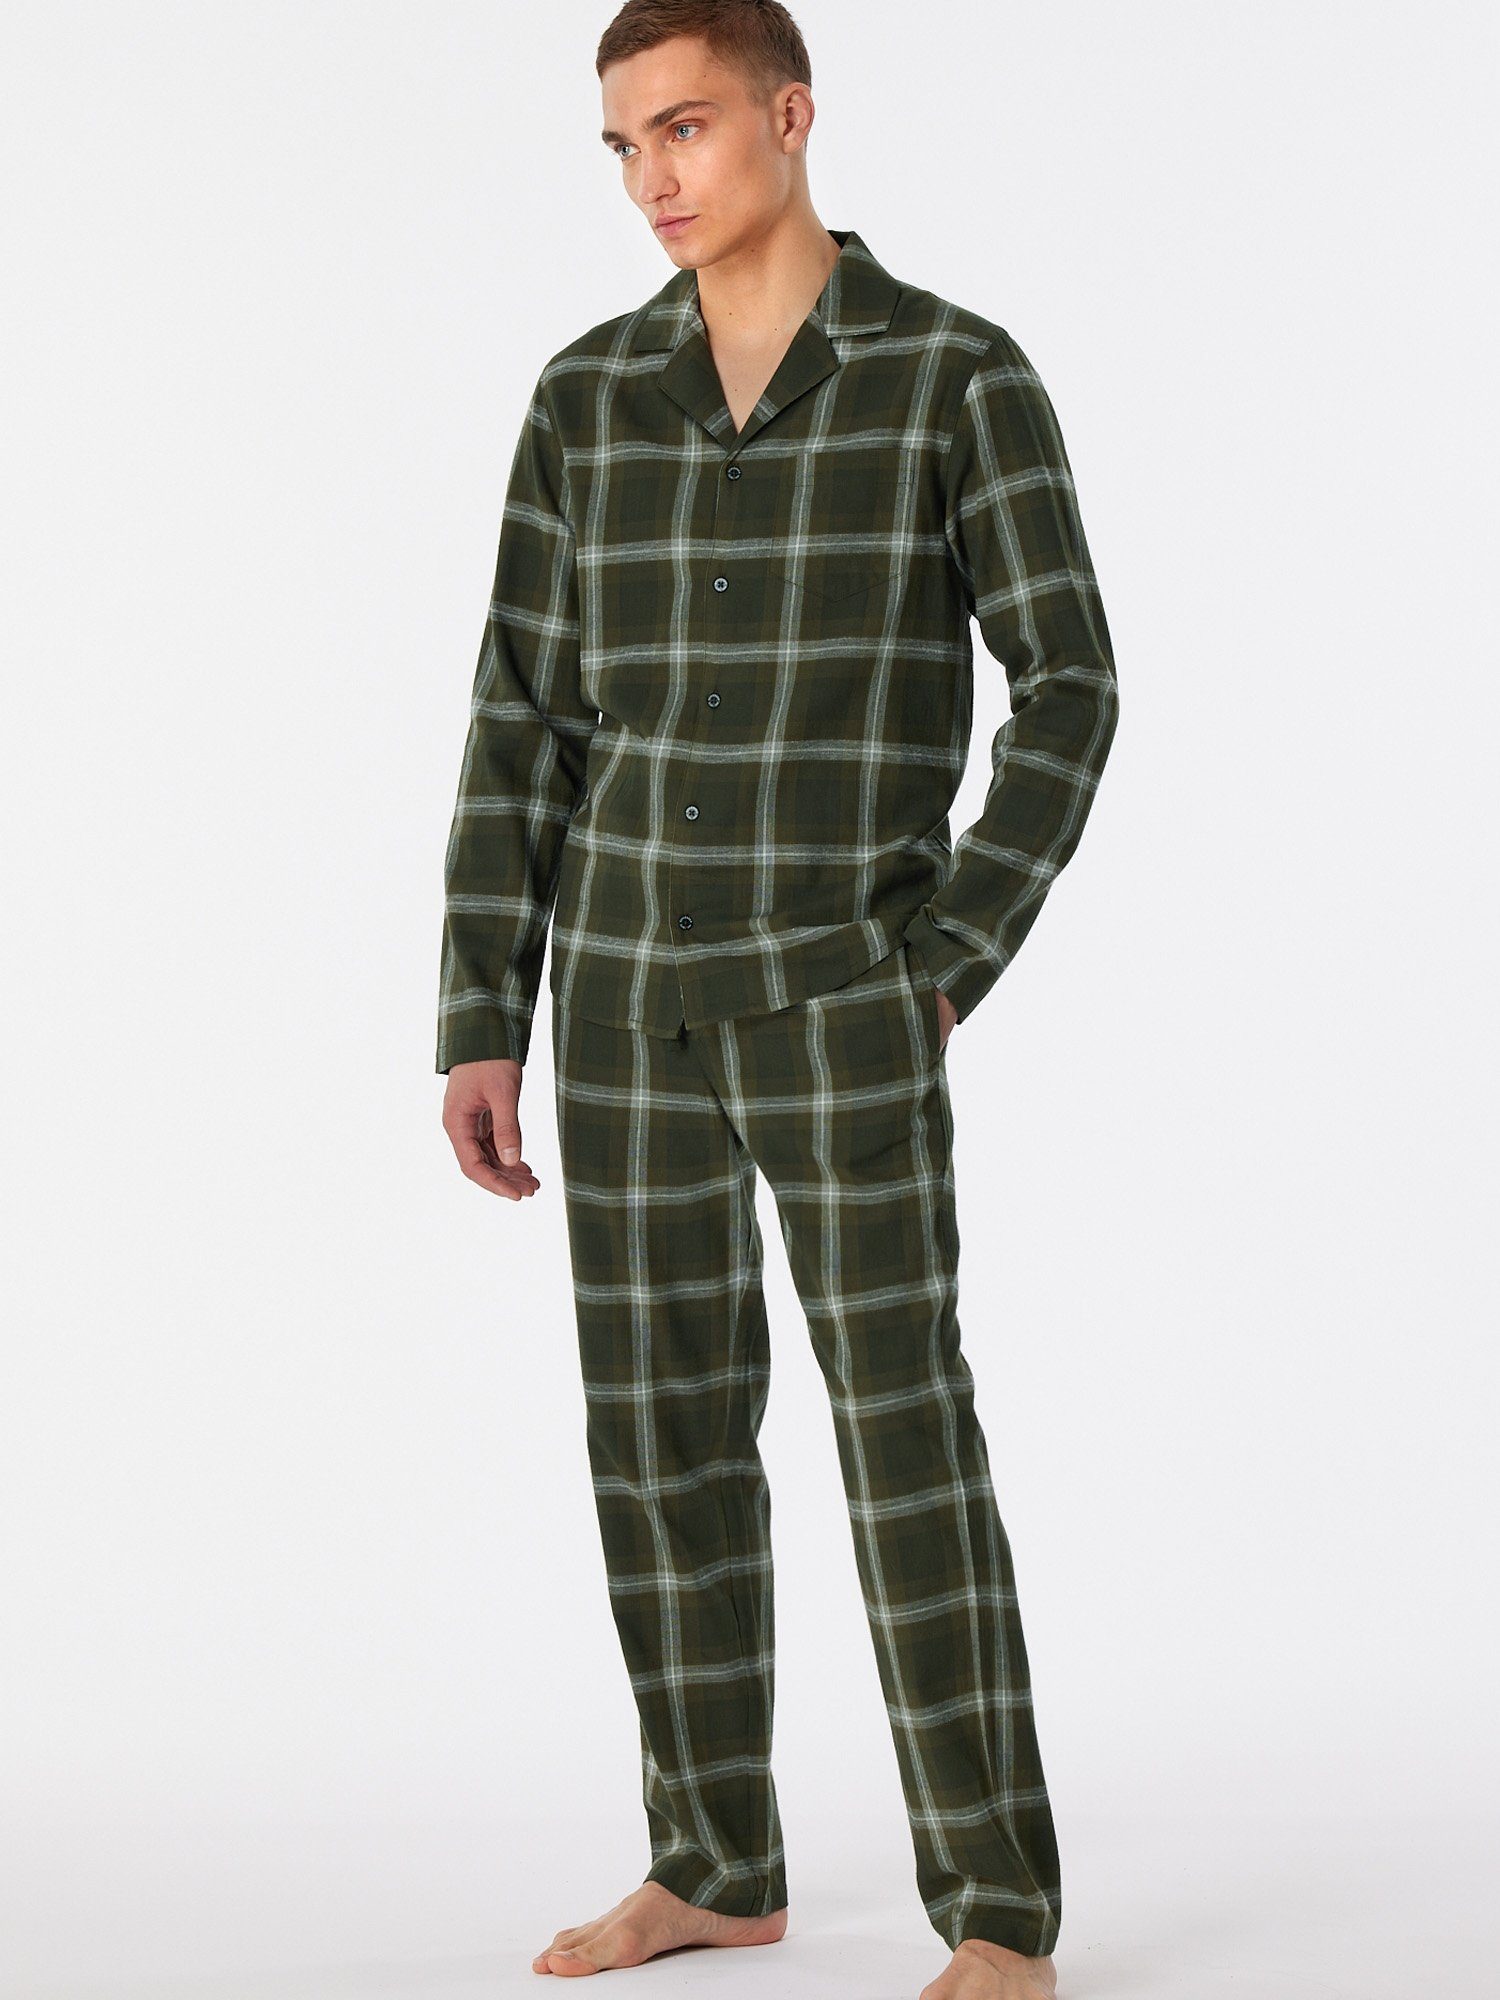 Schiesser Warming Nightwear schlafmode Pyjama pyjama schlafanzug dunkelgrün